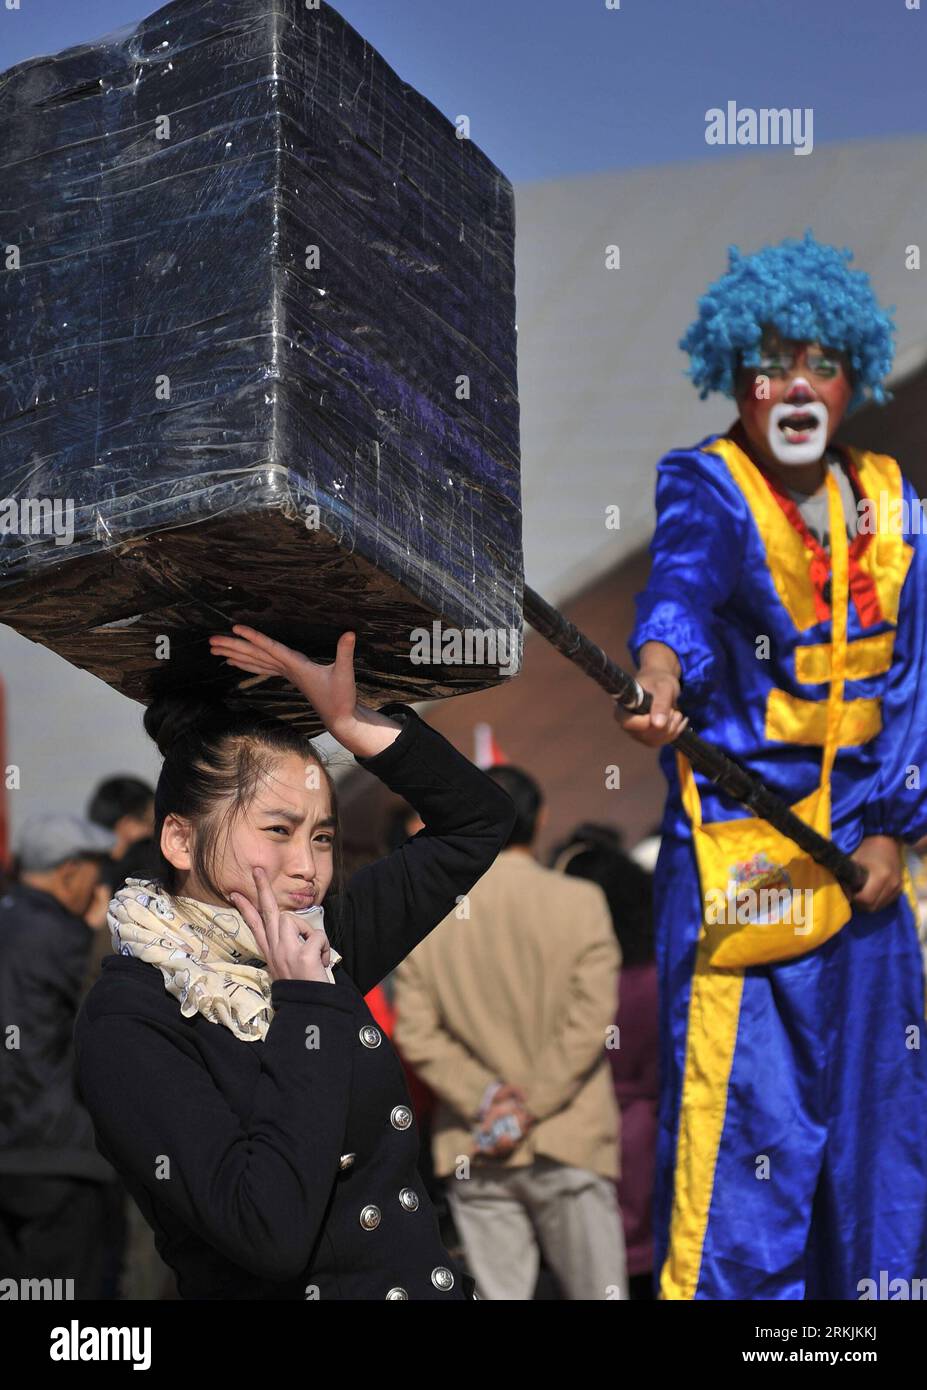 Bildnummer: 56142817  Datum: 03.10.2011  Copyright: imago/Xinhua (111003) -- CHANGCHUN, Oct. 3, 2011 (Xinhua) -- A clown performs with a visitor during an amusing carnival at a movie theme park in Changchun, capital of northeast China s Jilin Province, Oct. 3, 2011, the third day of the national holiday. (Xinhua/Wang Haofei) CHINA-JILIN-CHANGCHUN-CARNIVAL-CLOWNS (CN) PUBLICATIONxNOTxINxCHN Gesellschaft Karneval Clown Freizeitpark xns x0x 2011 hoch      56142817 Date 03 10 2011 Copyright Imago XINHUA  Changchun OCT 3 2011 XINHUA a Clown performs With a Visitor during to amusing Carnival AT a Mo Stock Photo